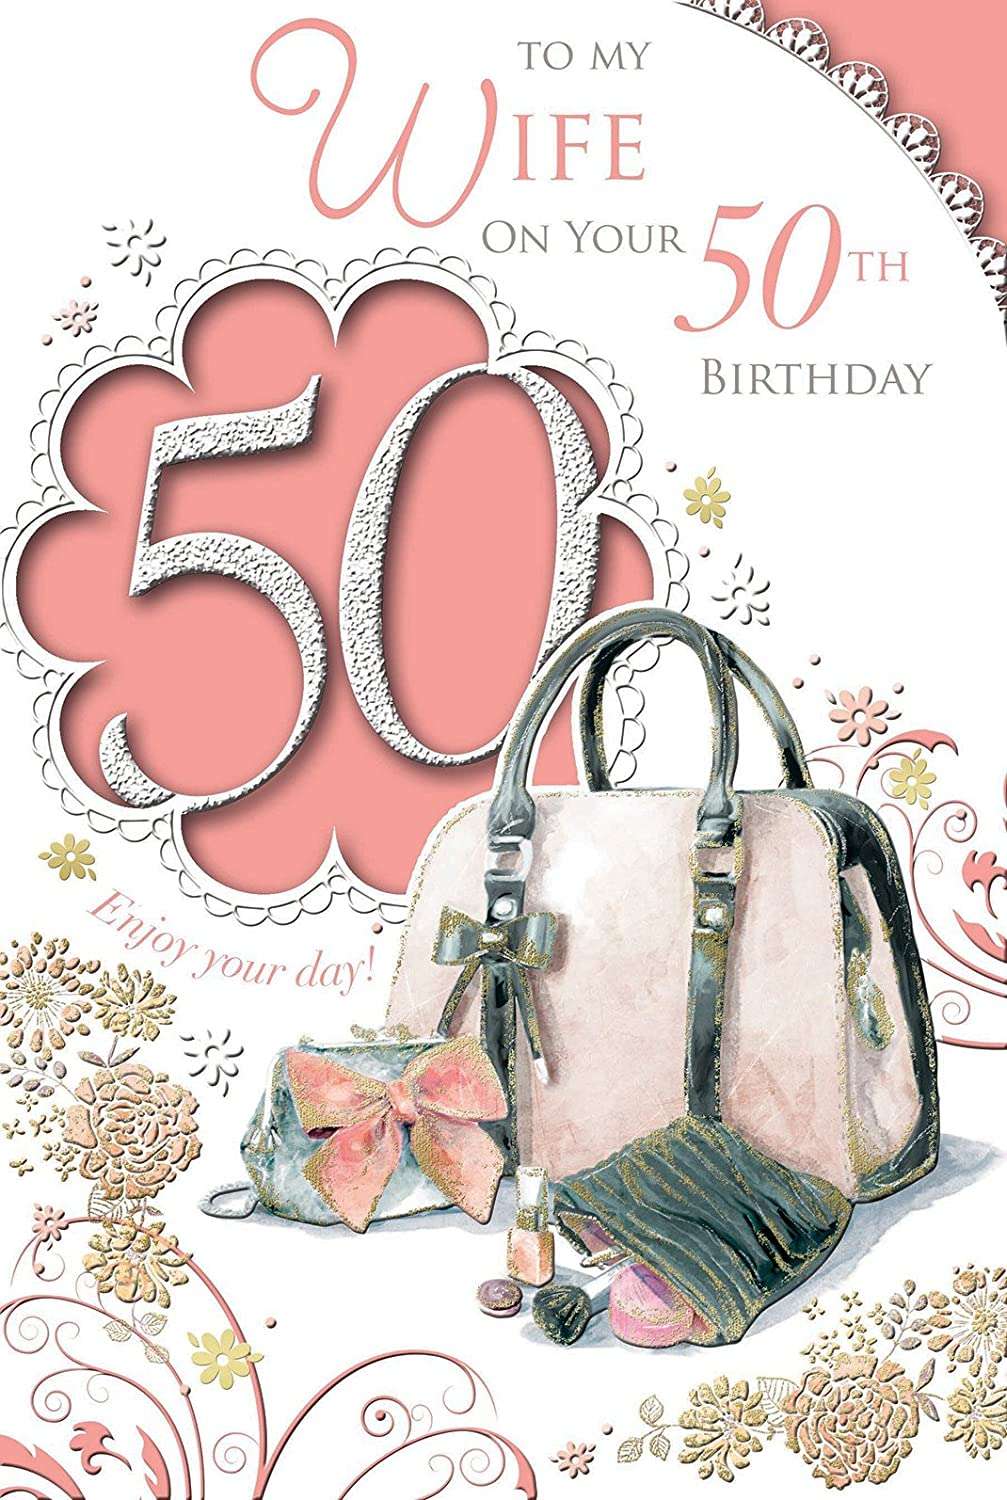 Xpress Yourself To My Beautiful Wife Happy 50th Birthday Medium Sized ...